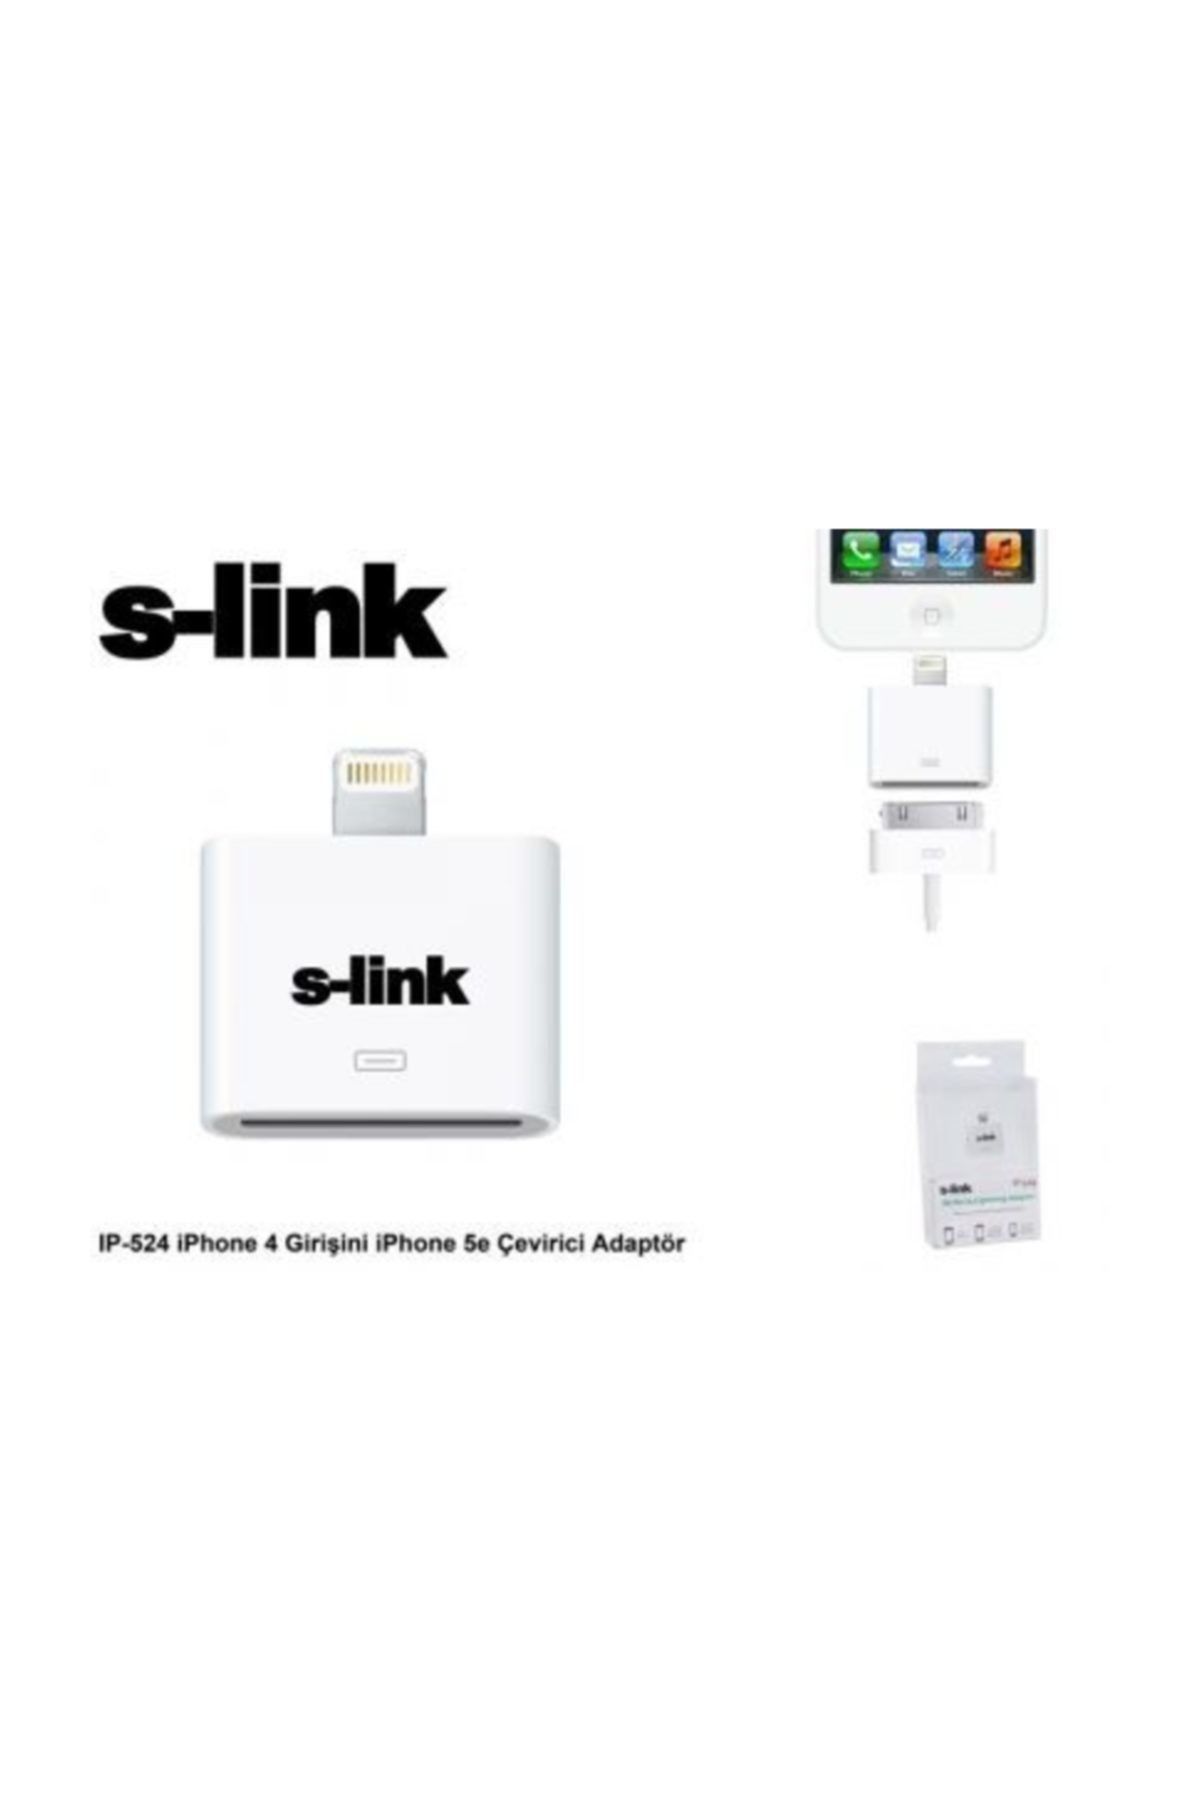 S-Link S-Link Ip-524 İphone 4 Girişini İphone 5E Çevirici Adaptör